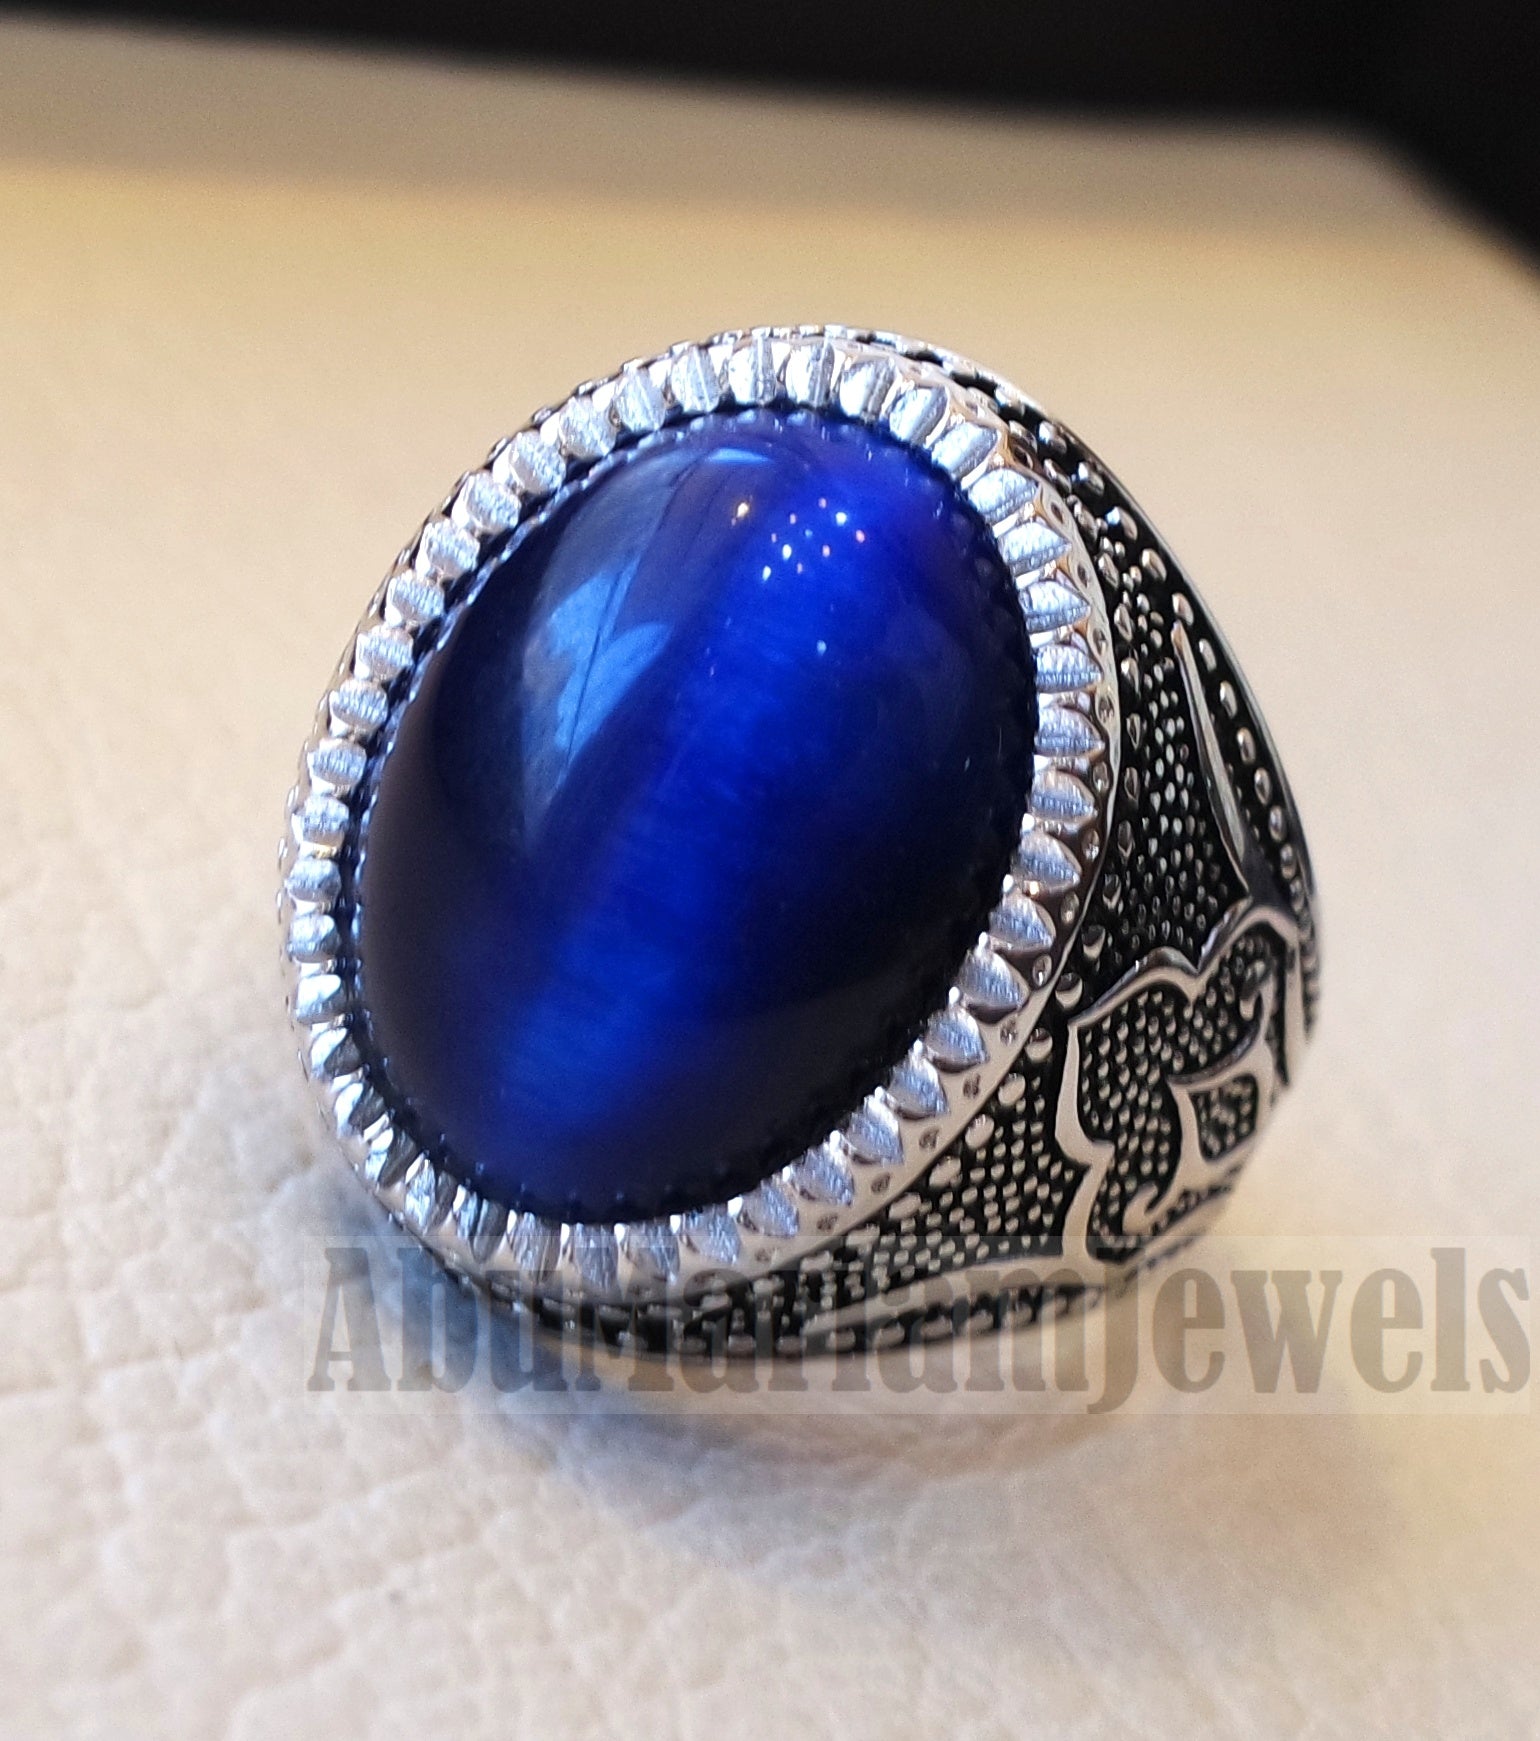 Stunning tiger eye blue stone men ring sterling silver 925 oriental jewelry handmade Arabic Turkey Ottoman style any size